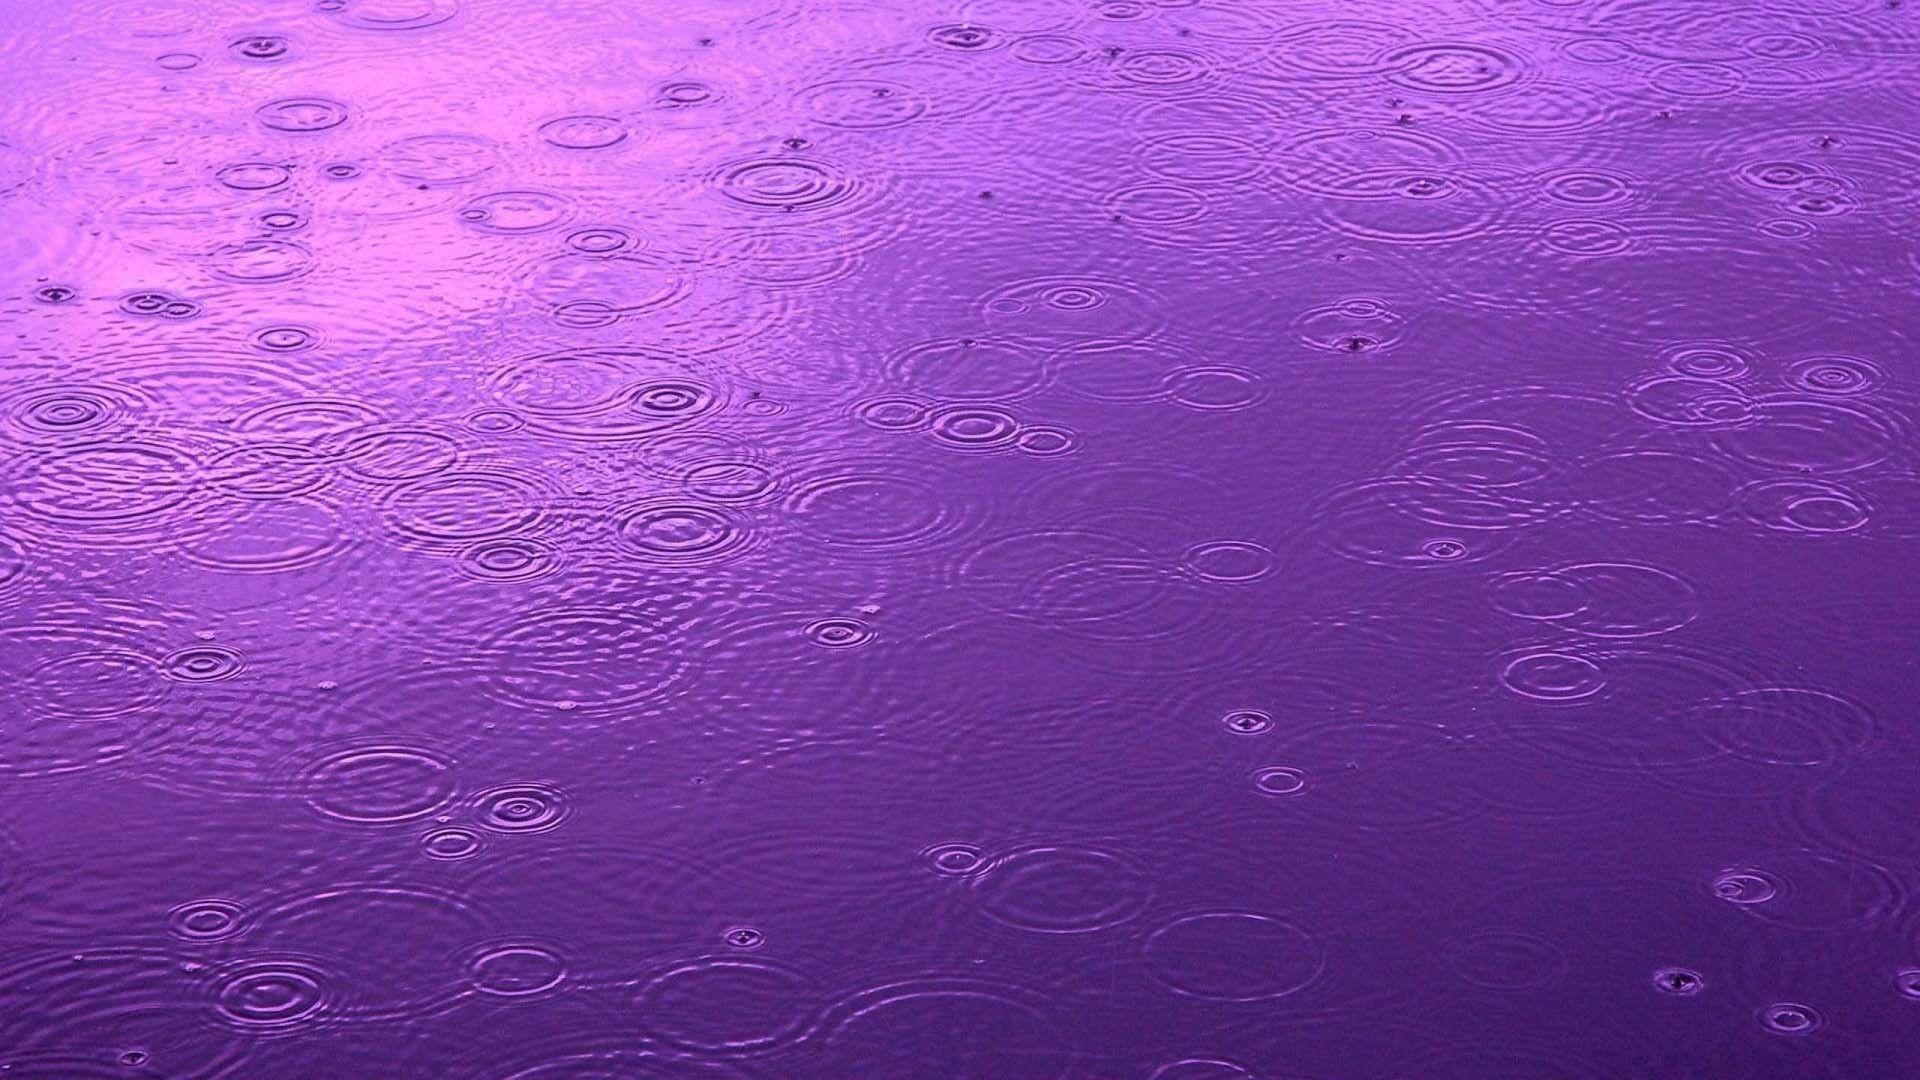 Purple Rain Wallpapers Wallpaper Cave